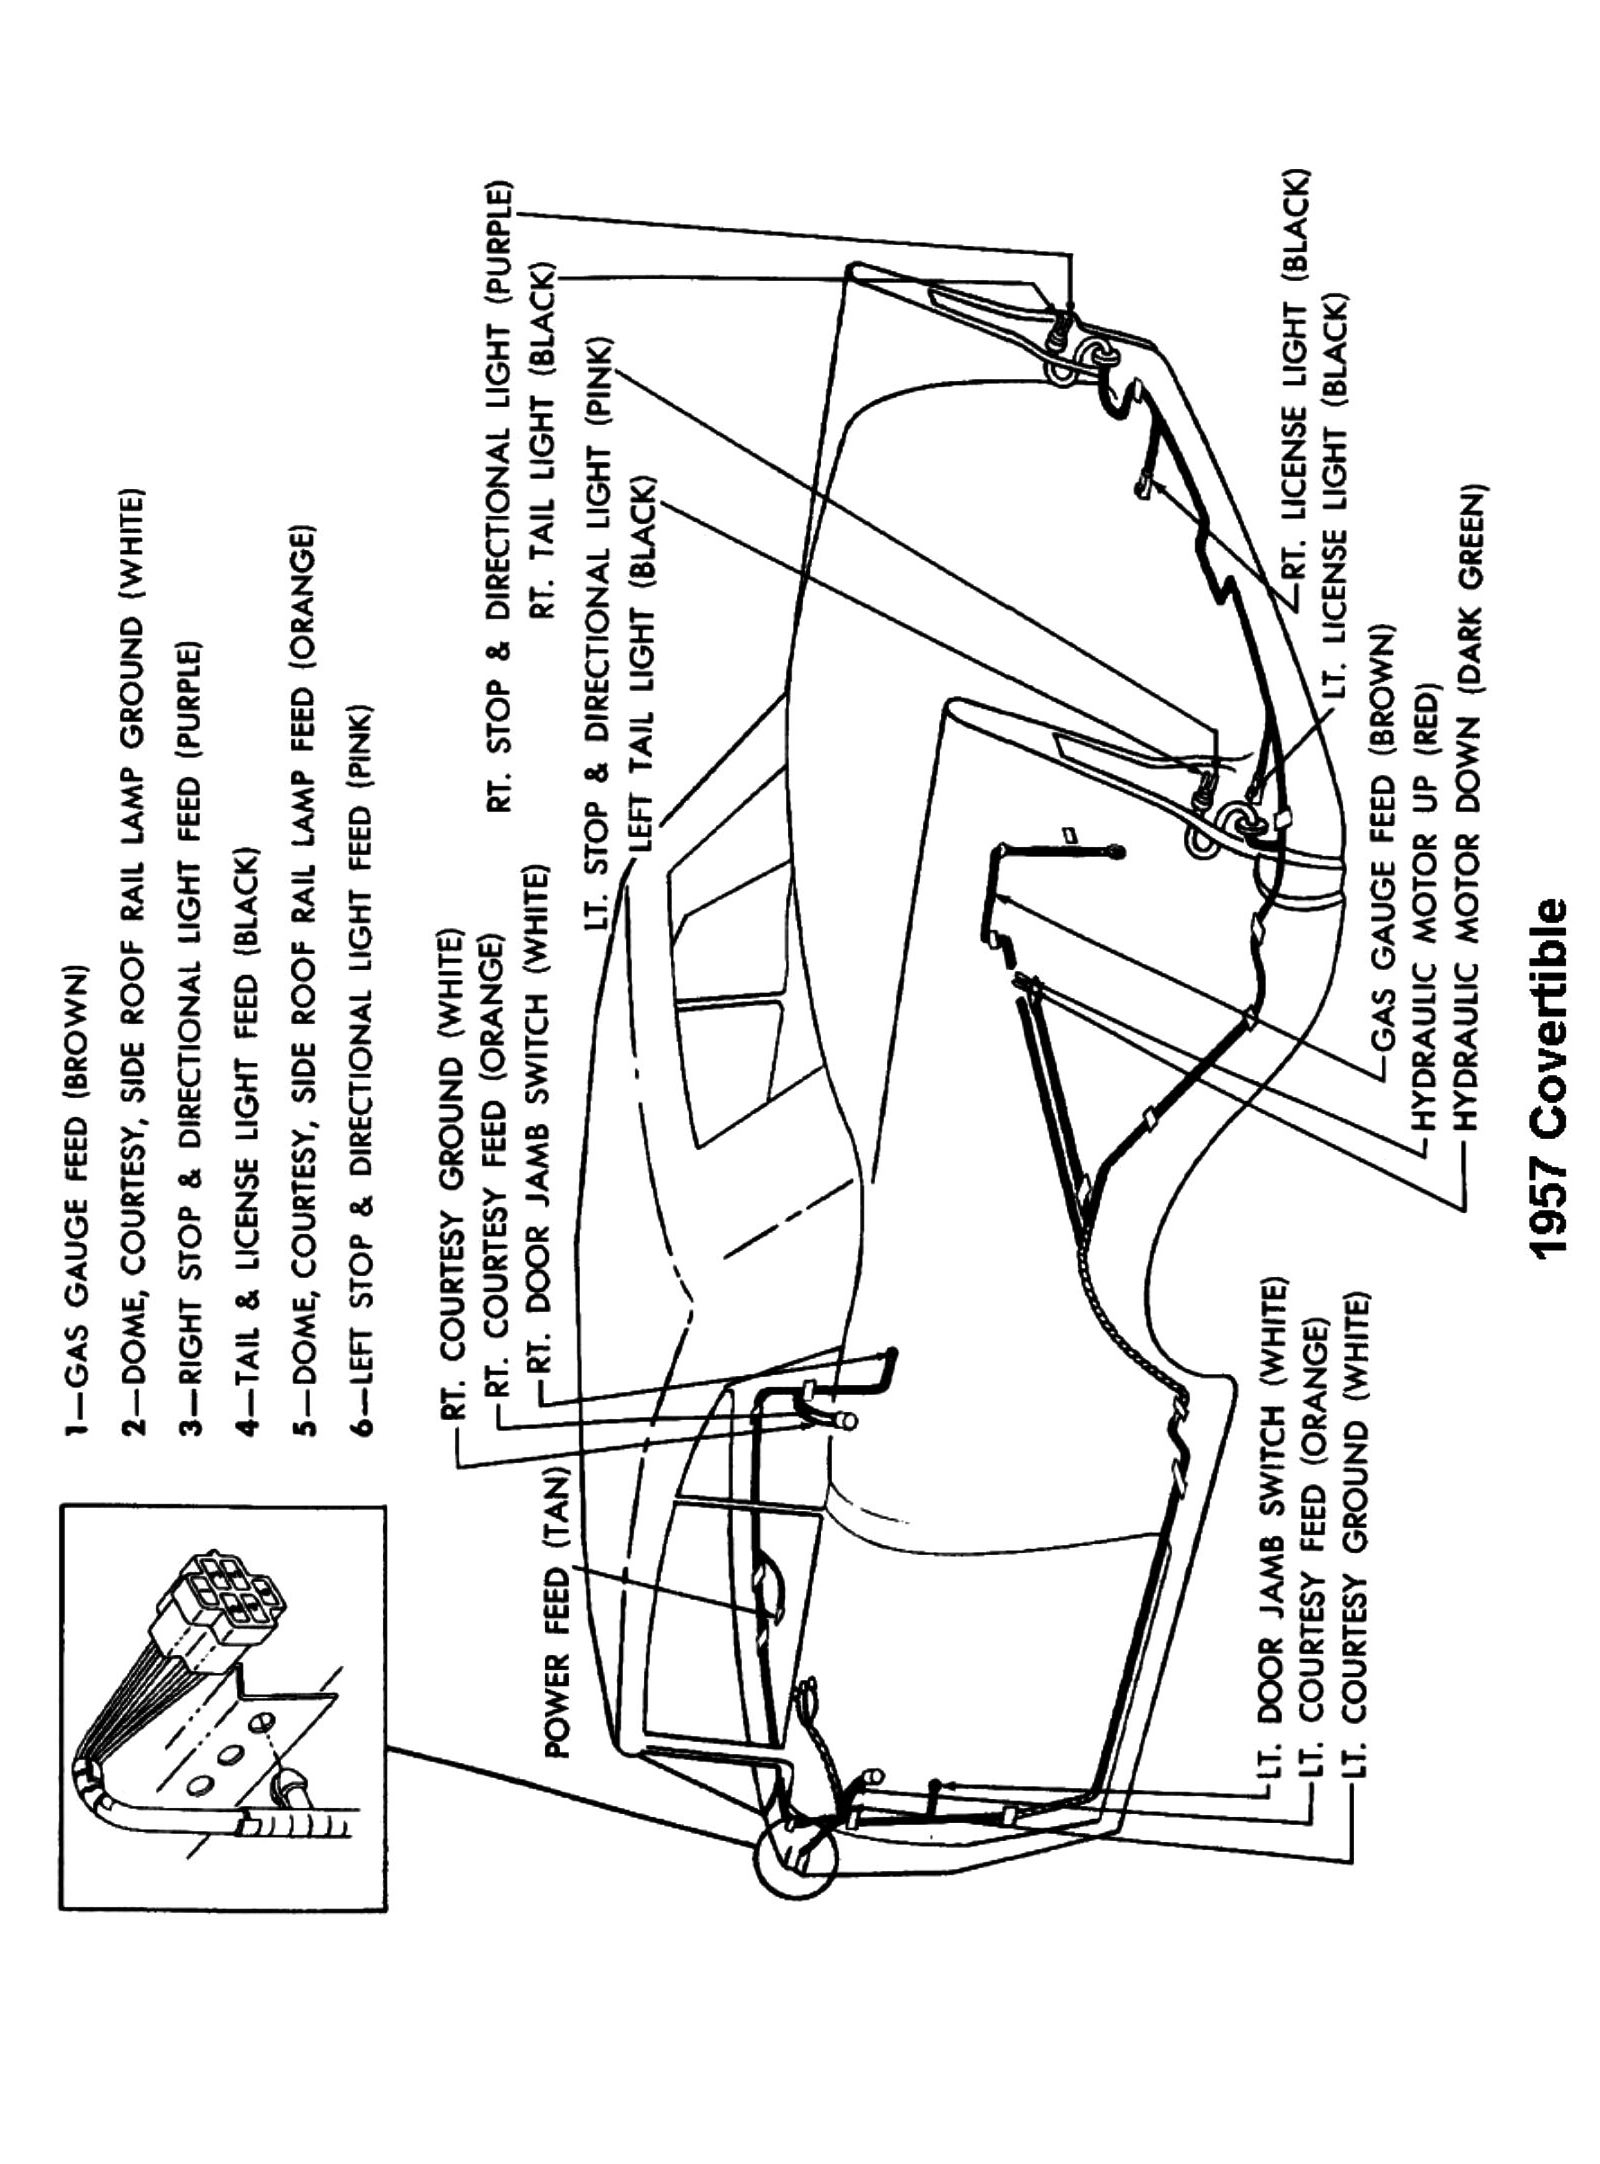 57 Chevy Starter Wiring Diagram - Starter Motor 1965 Chevrolet Wiring